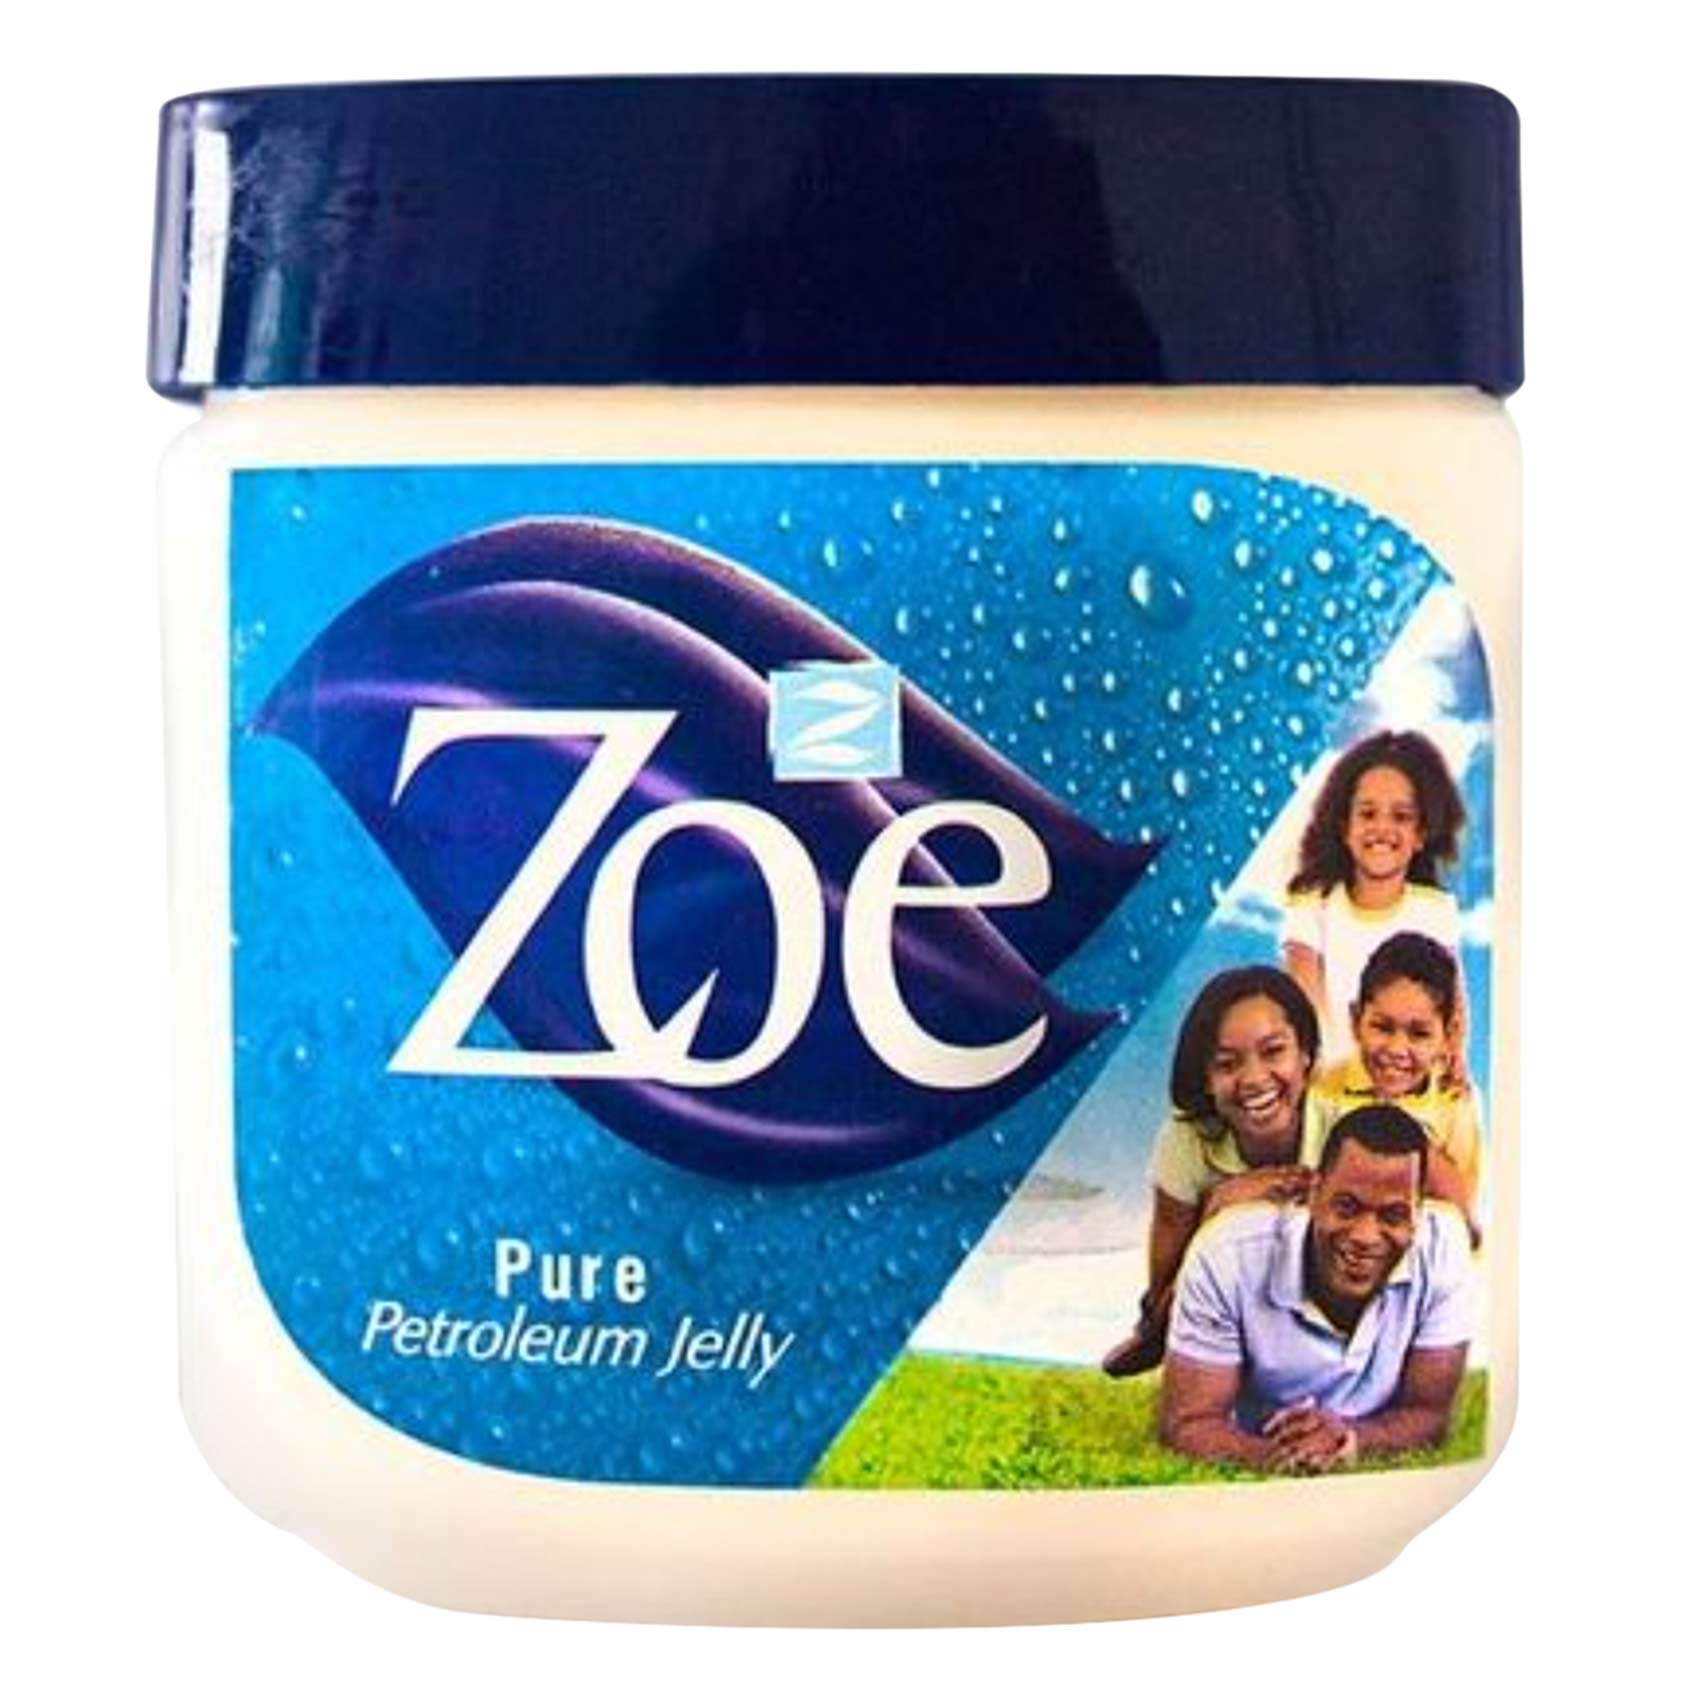 Zoe Pure Petroleum Jelly 250g